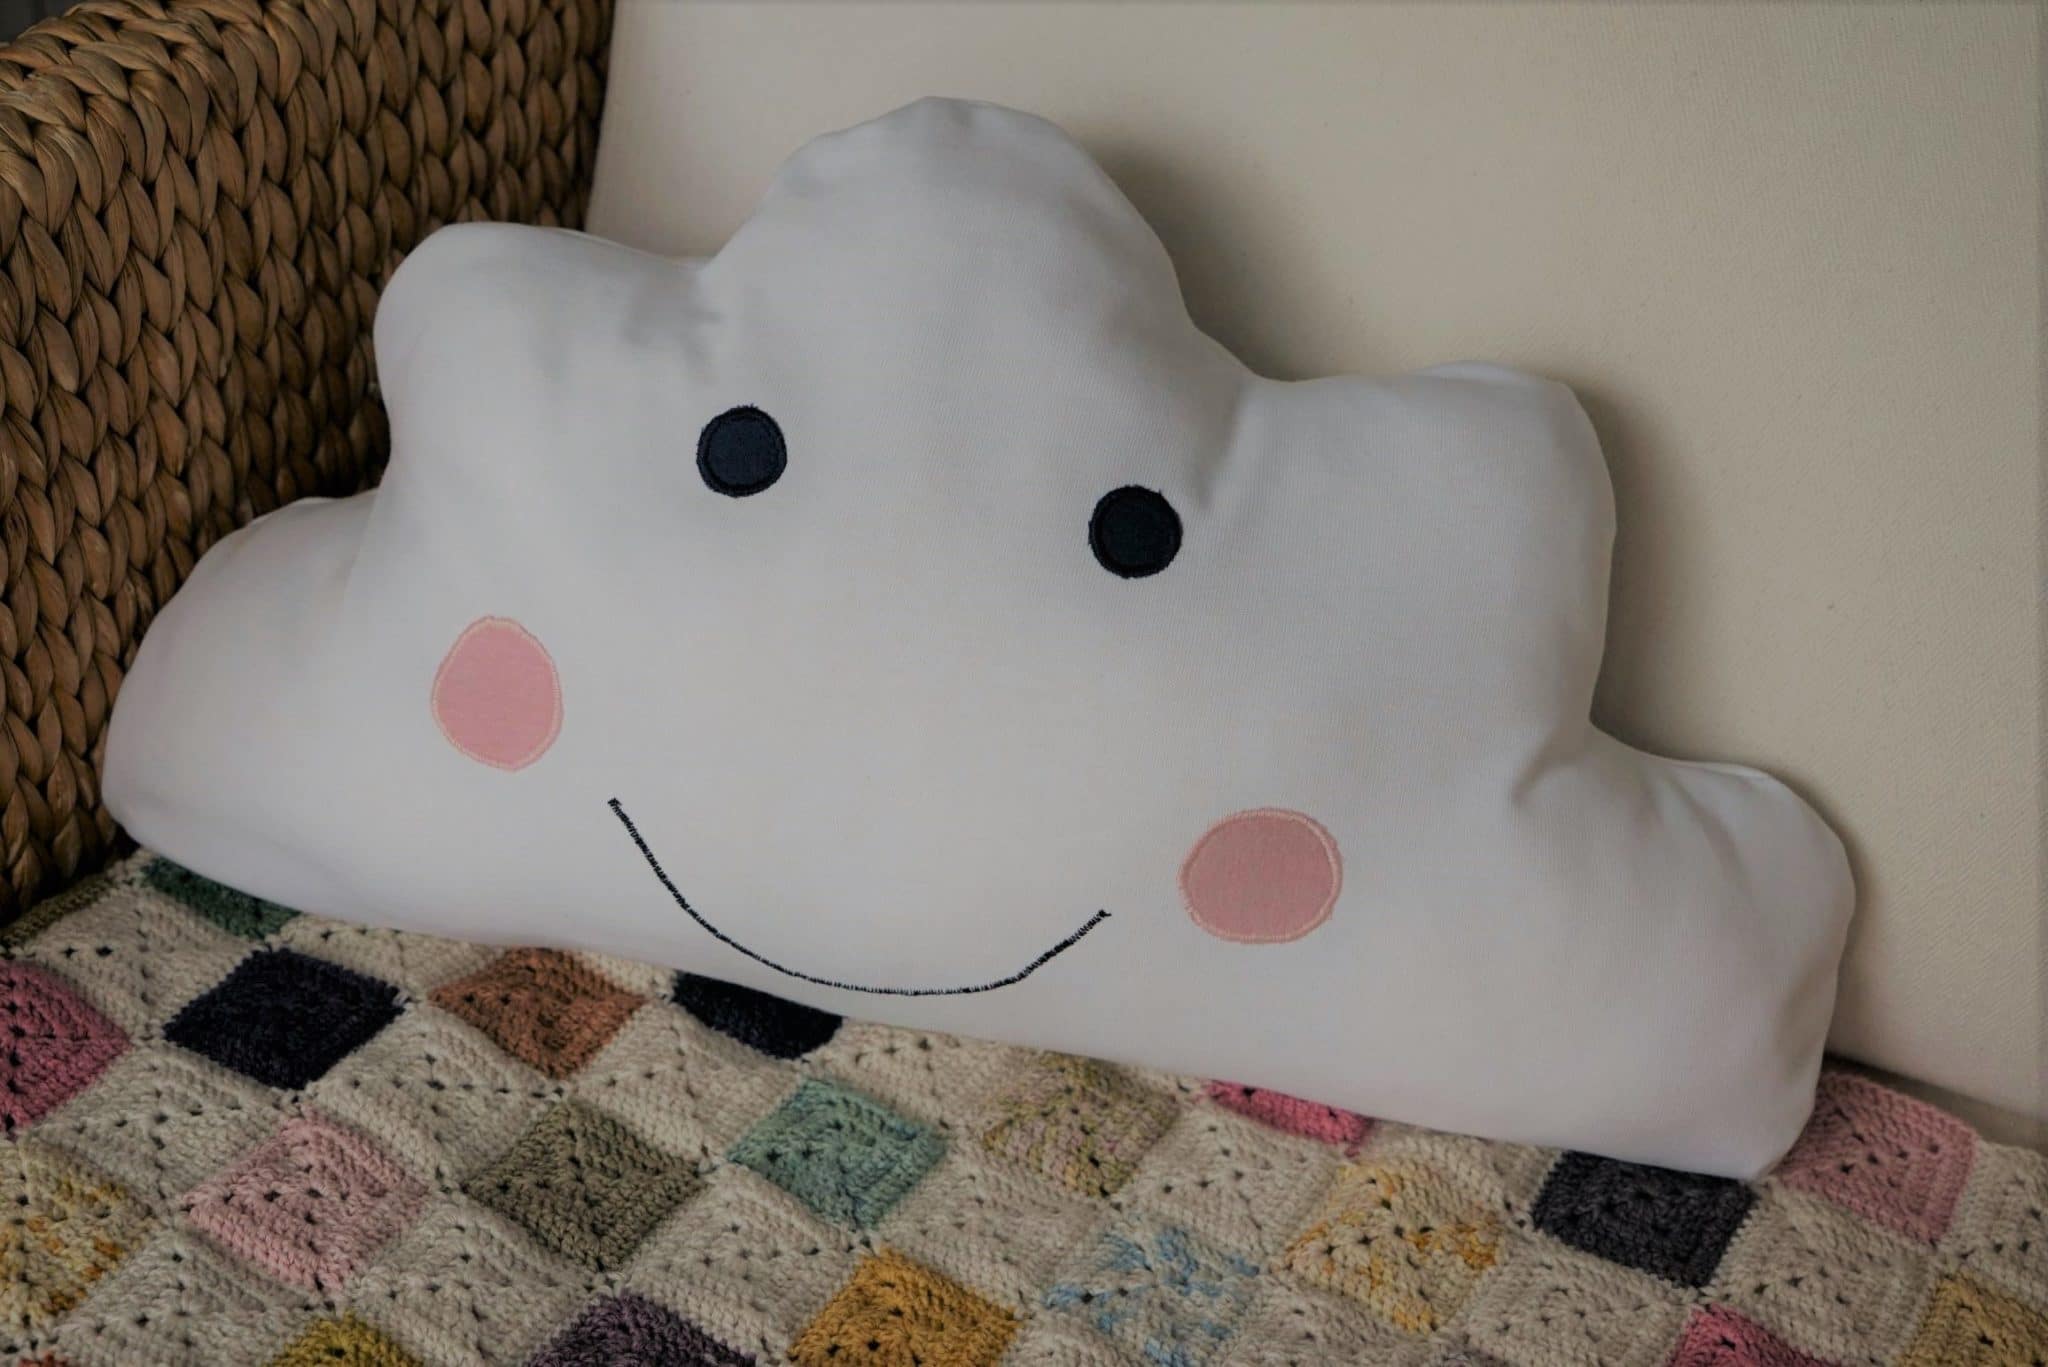 The Cloud Pillow